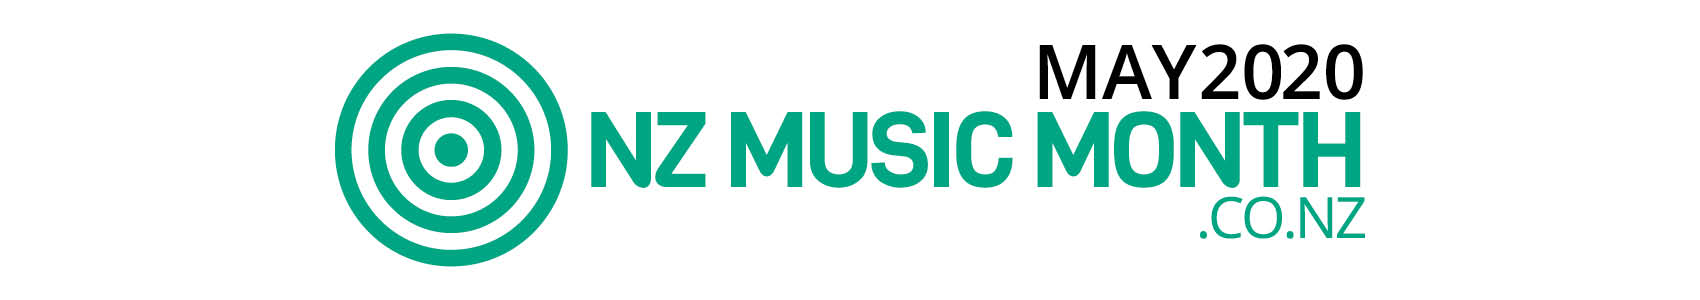 NZ Music Month's 20th Anniversary